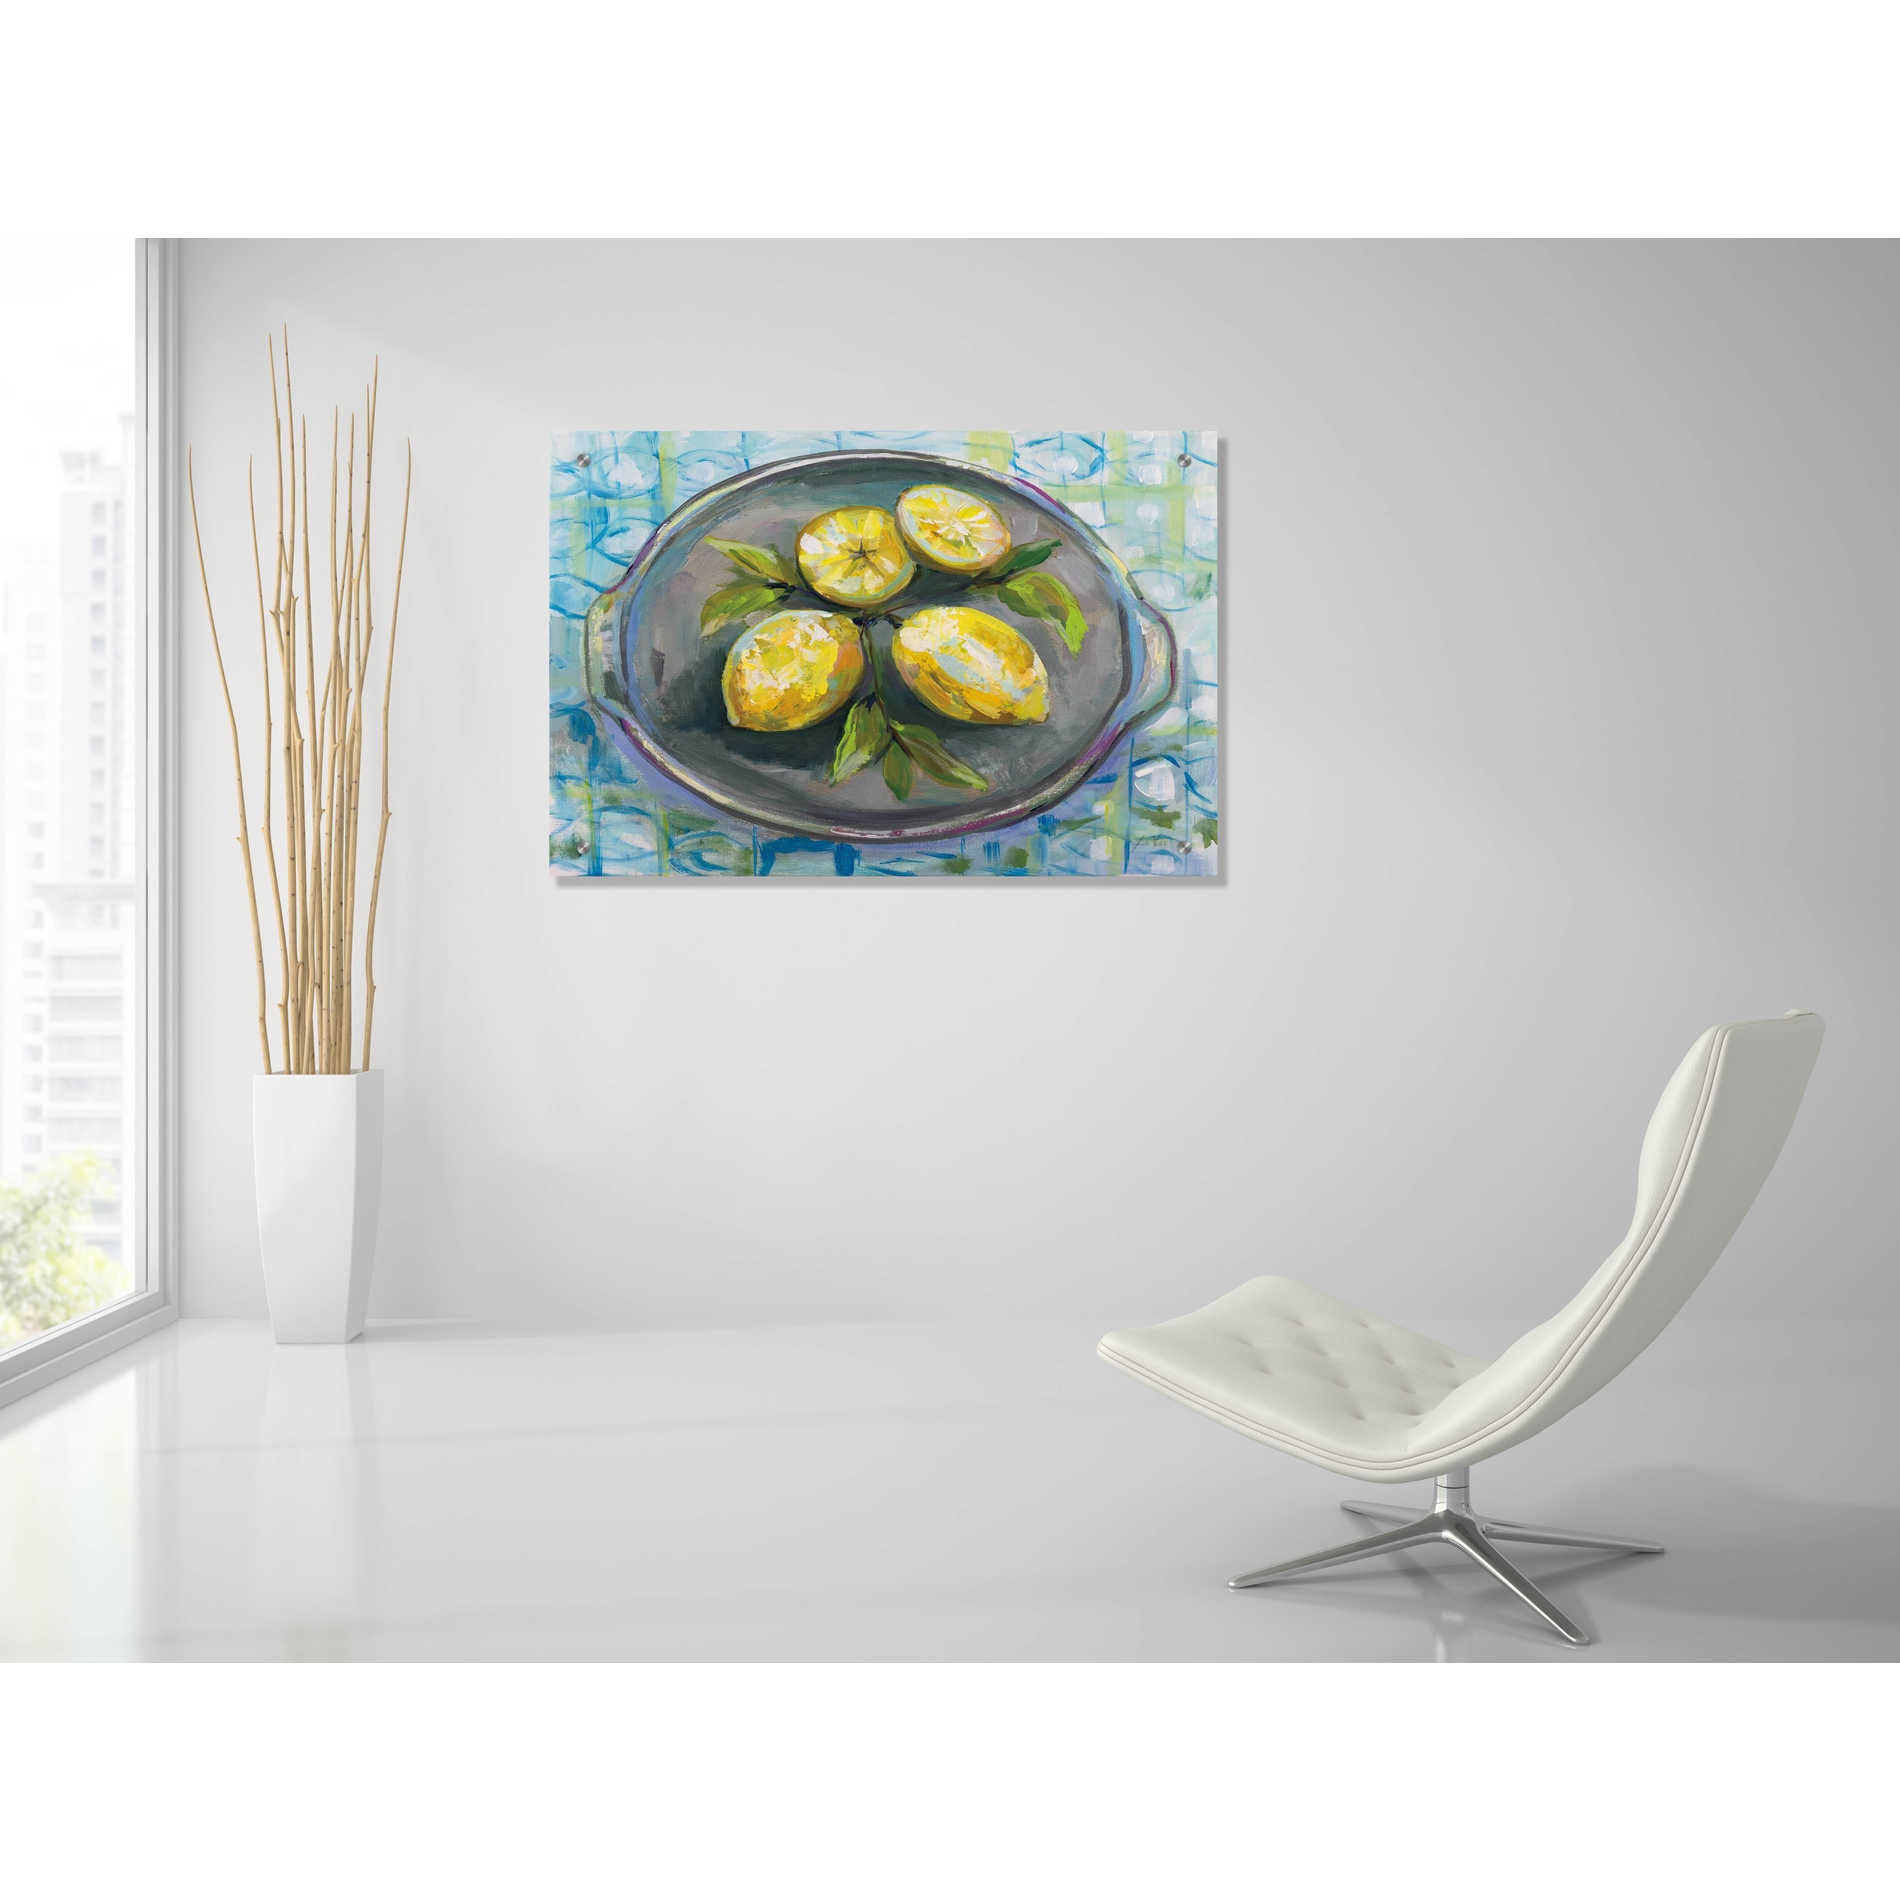 Epic Art 'Lemons' by Jeanette Vertentes, Acrylic Glass Wall Art,36x24